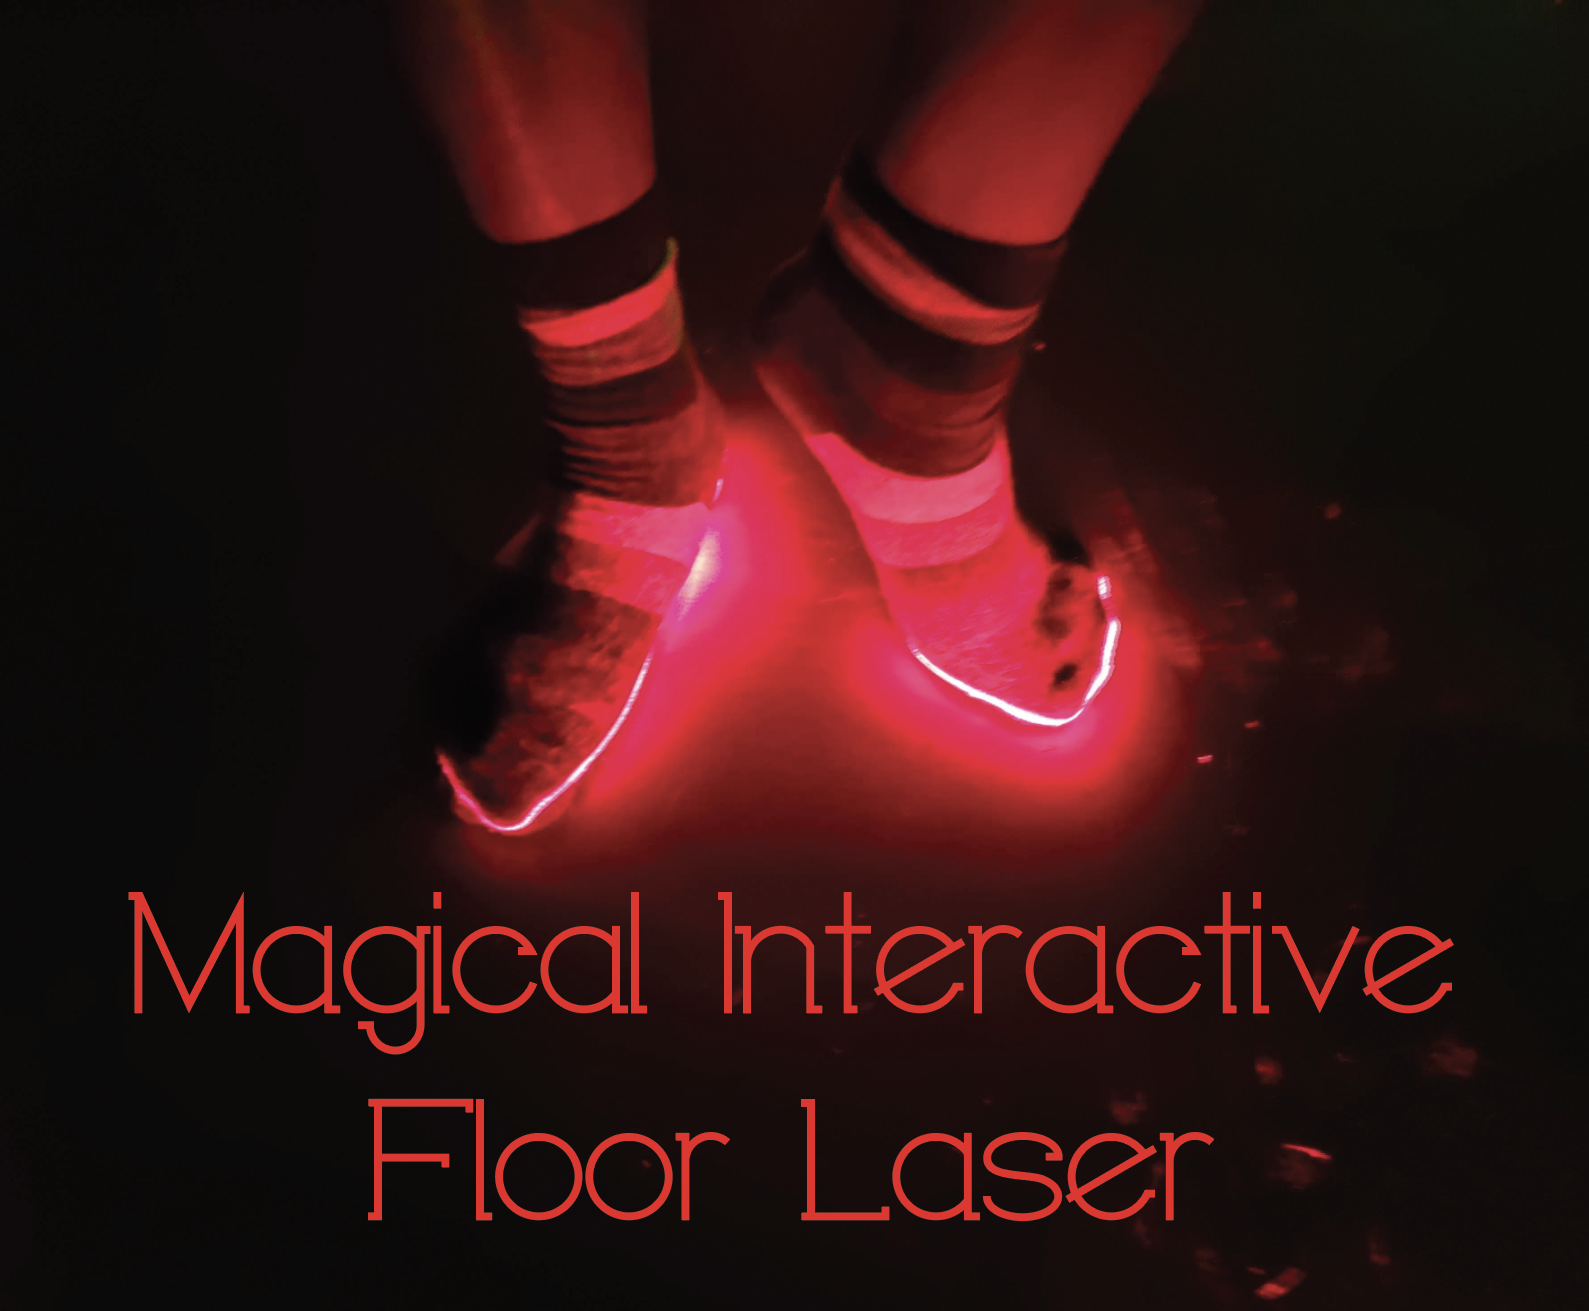 Magical "Interactive" Floor Light